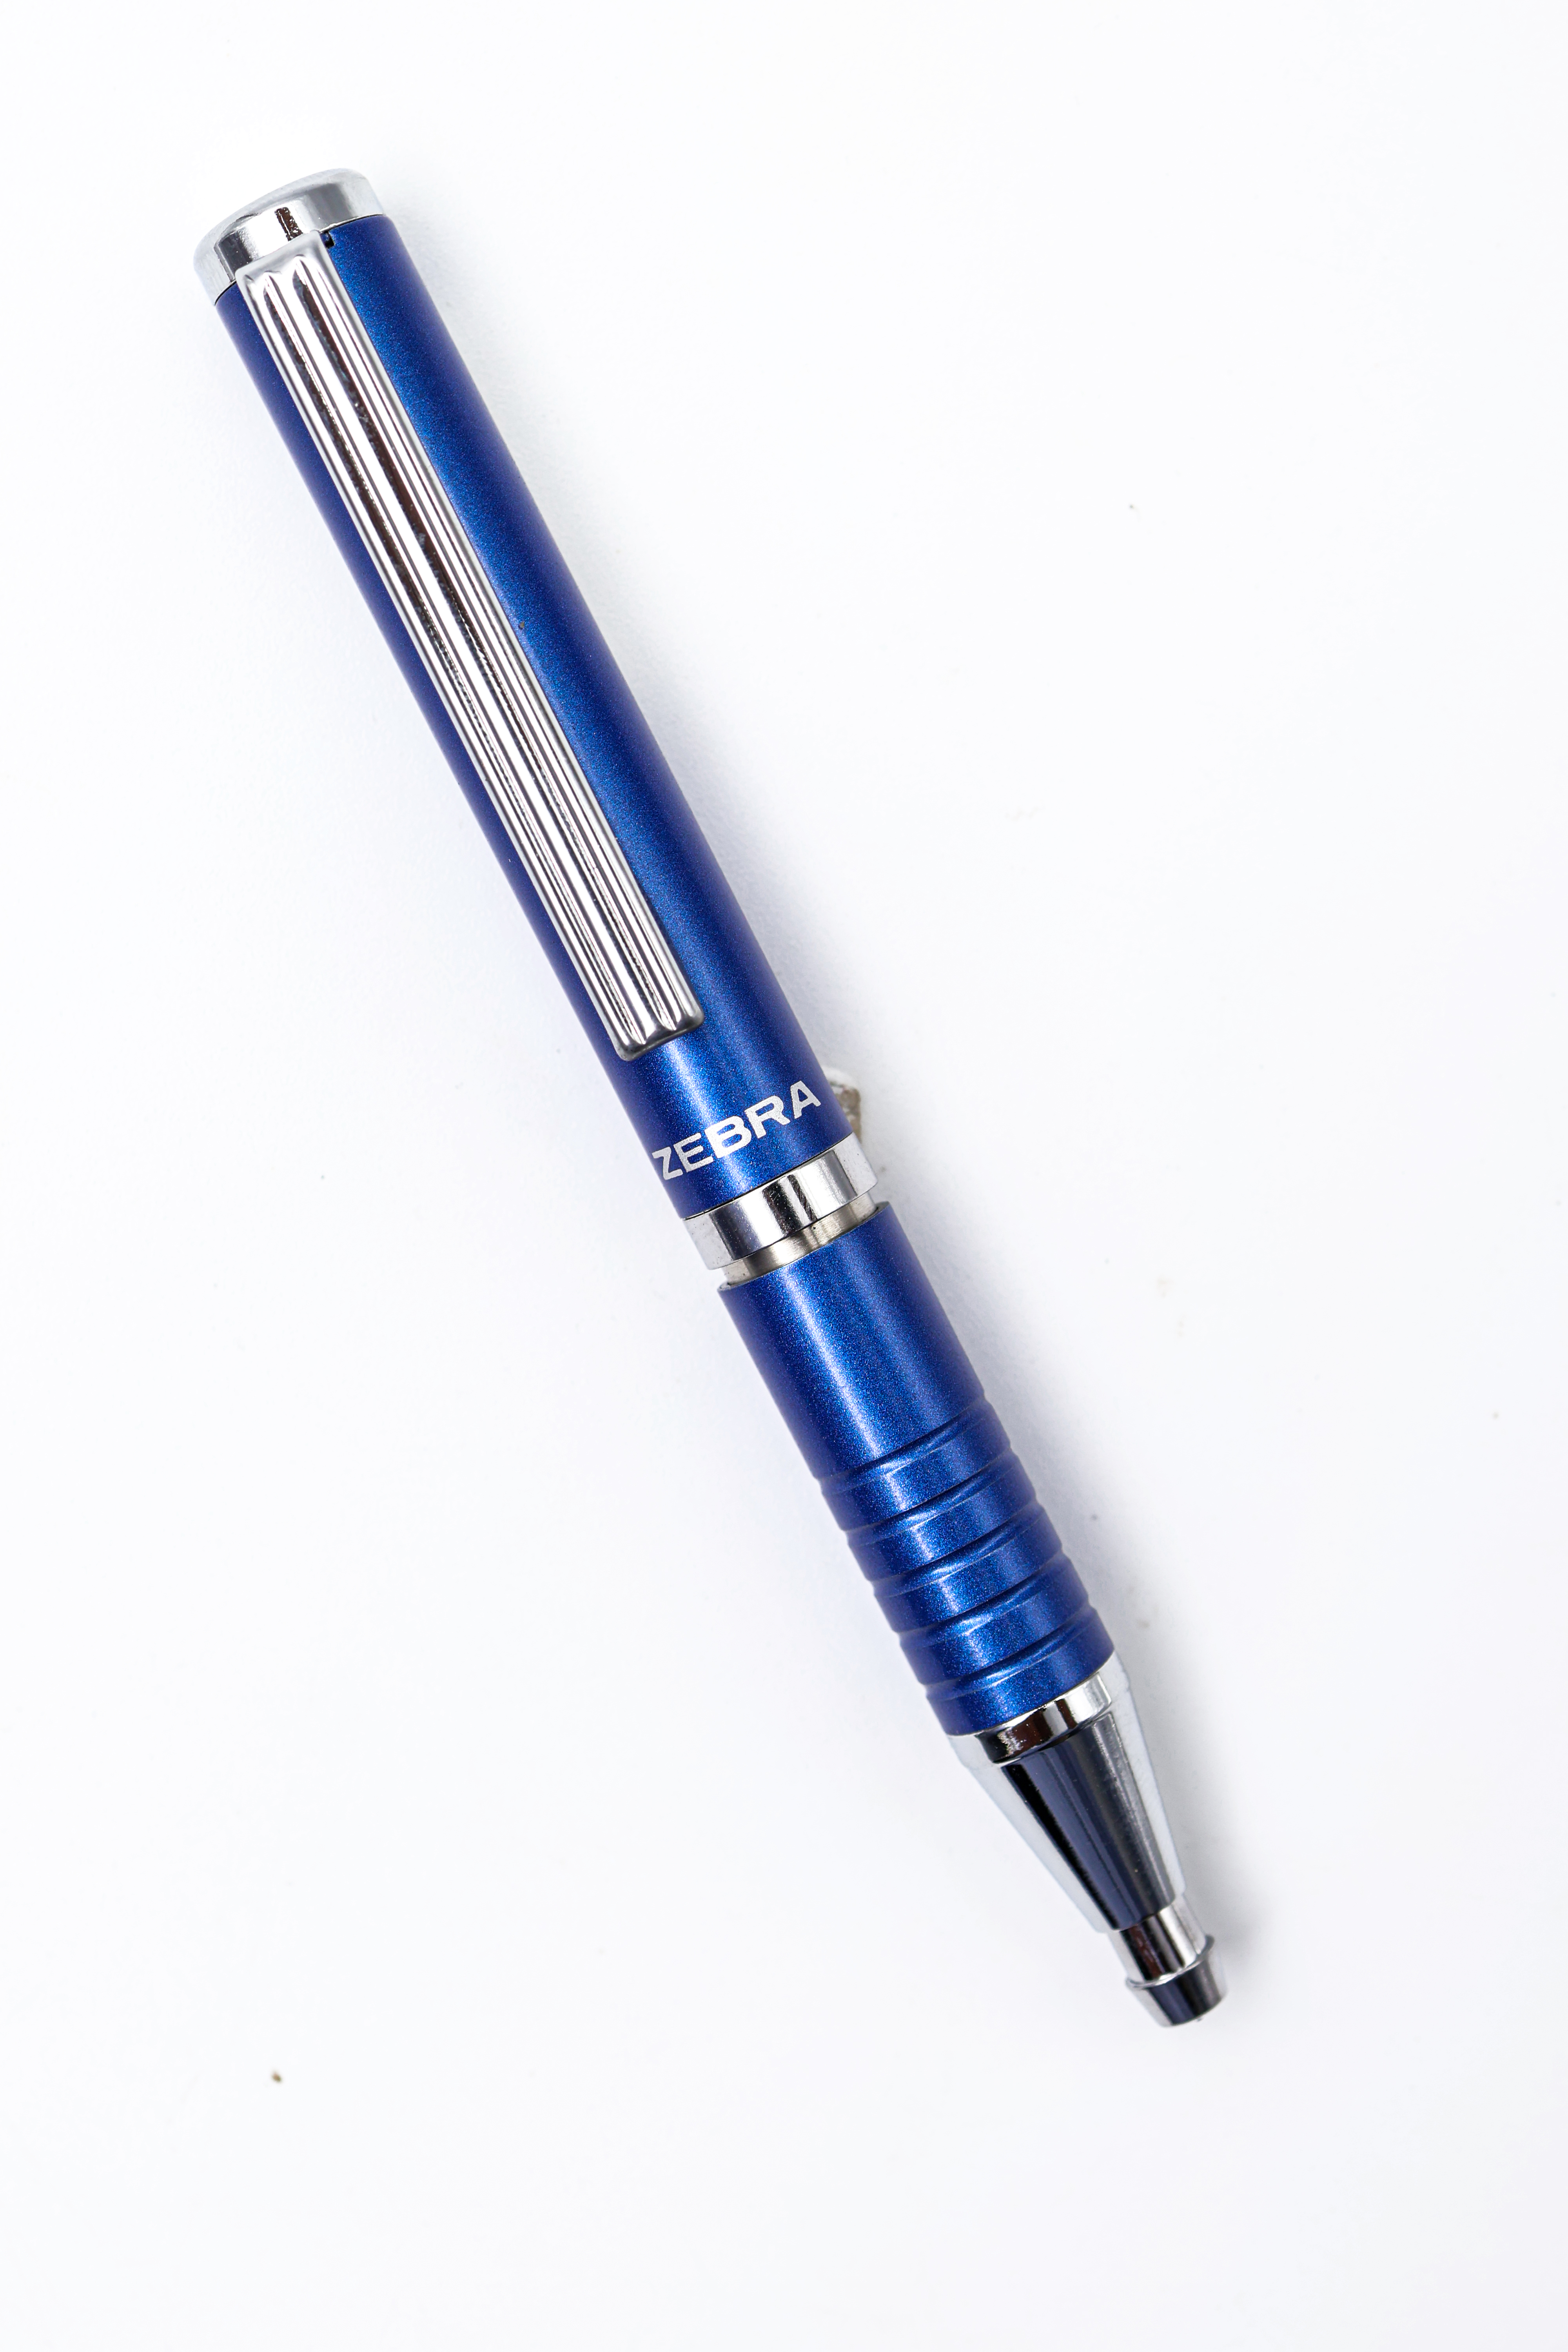 Zebra SL-F1 BA115 Mini Royal Blue Color Body Expand Cap Pull Type Ball Pen SKU 24830